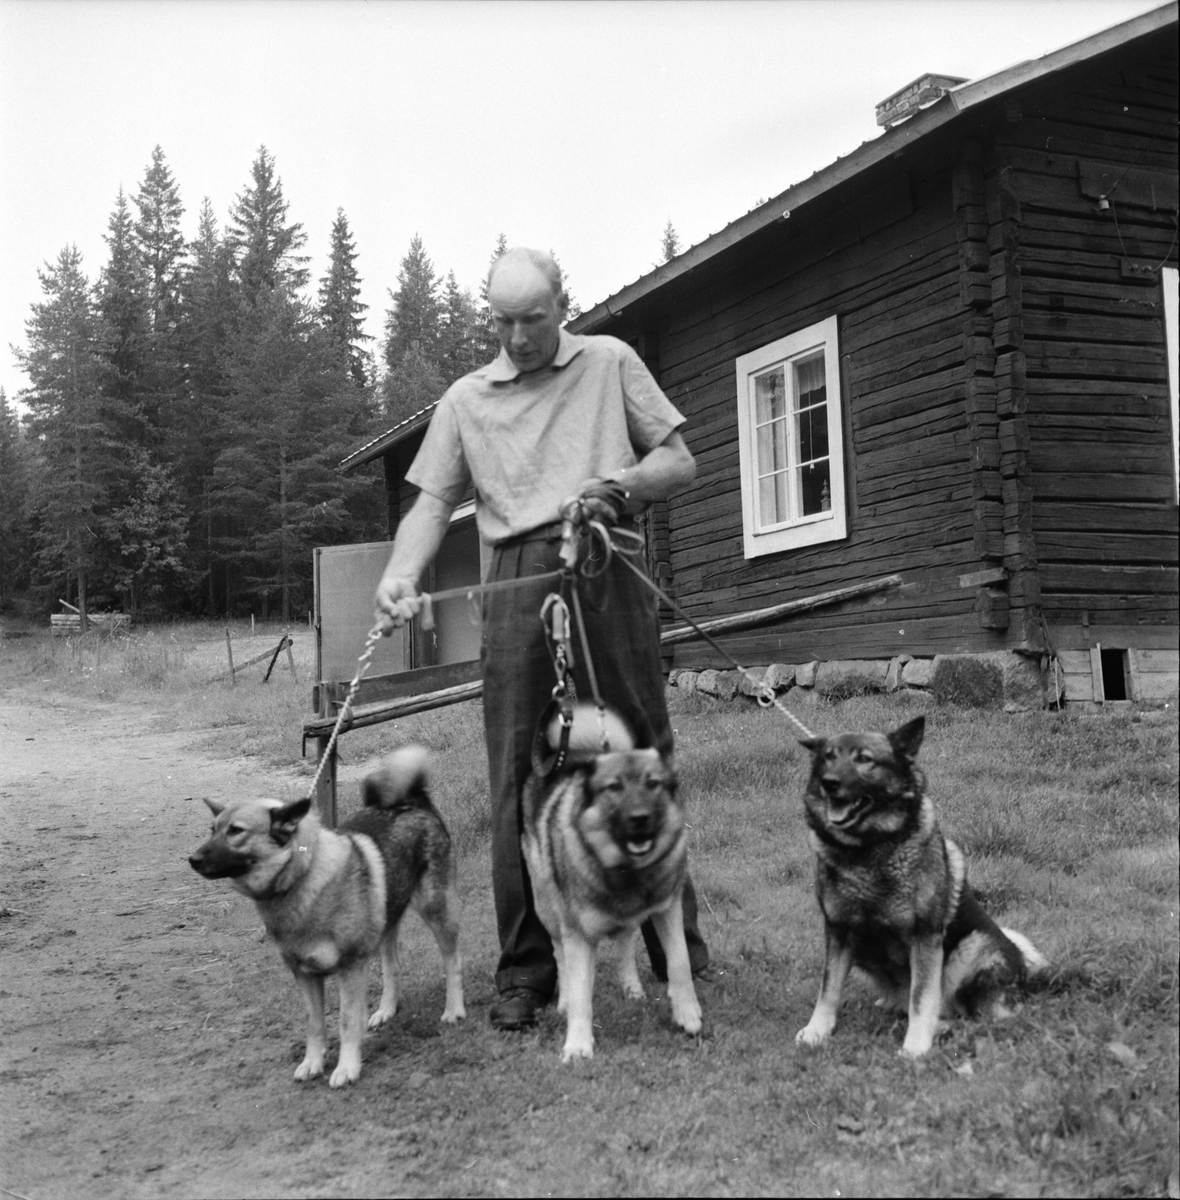 Änga,
Olle o Johan Storm,
11 Juli 1961